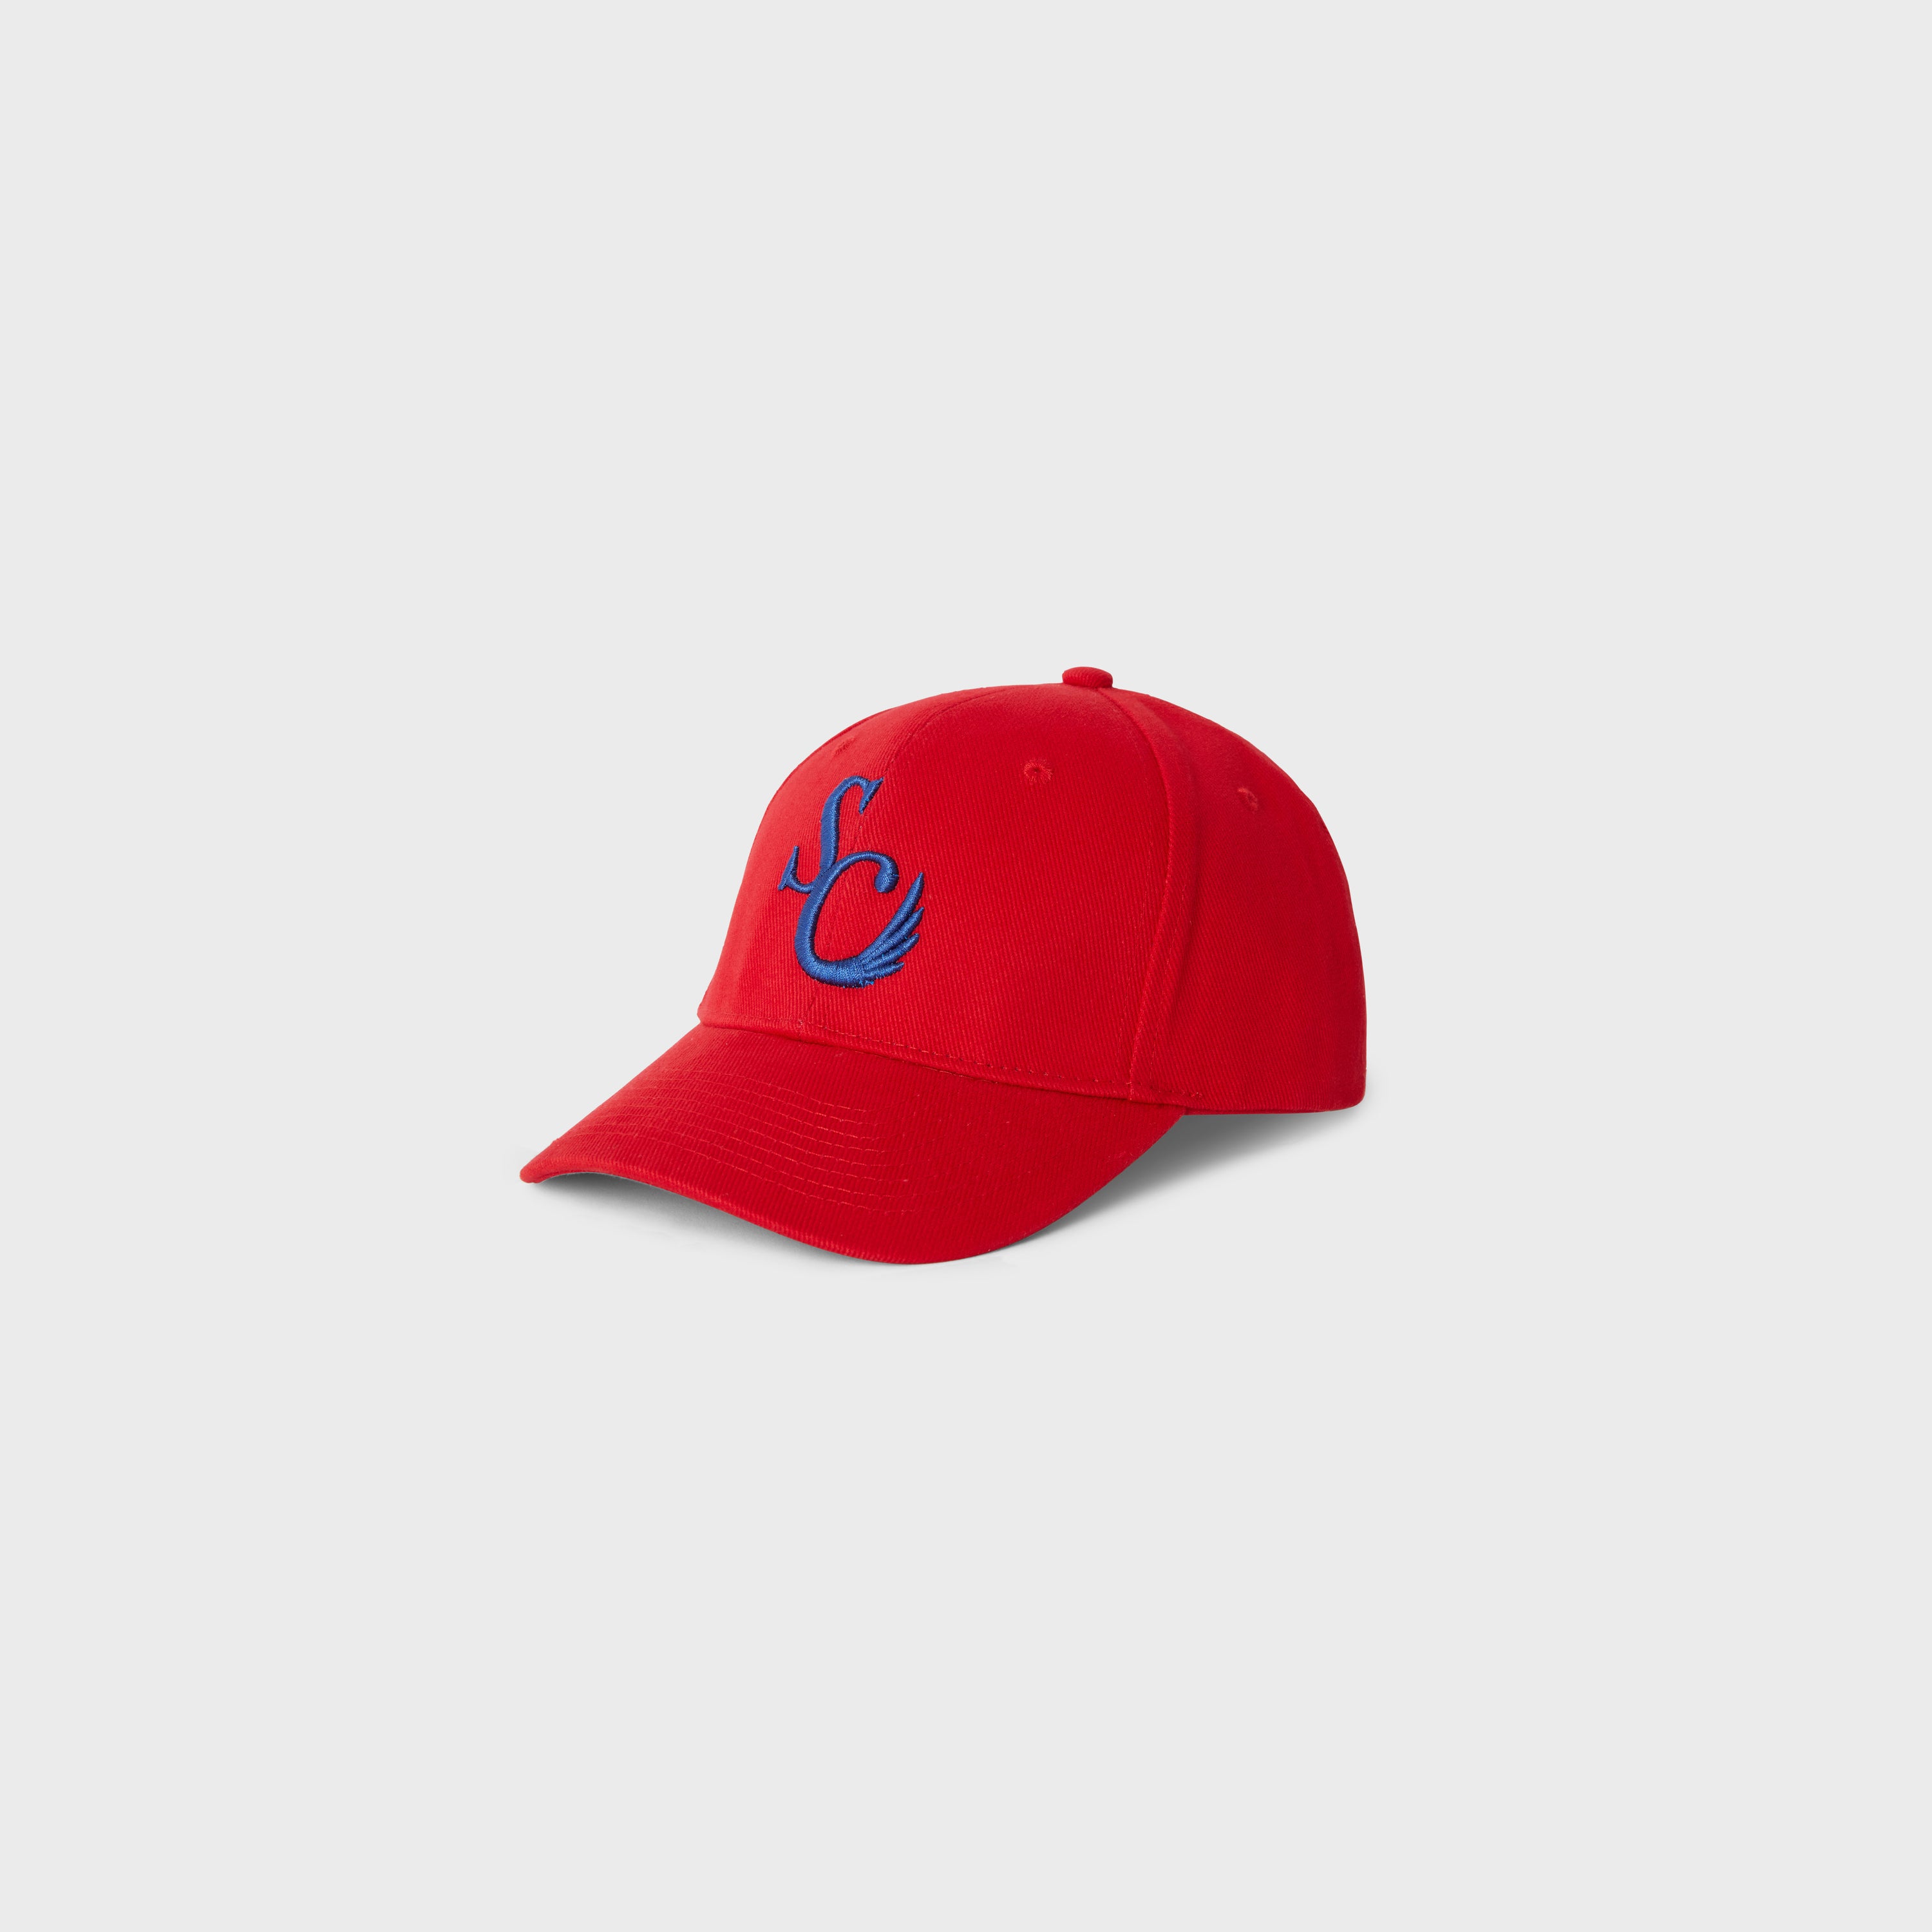 Wing Logo Baseball Cap in Red Cotton